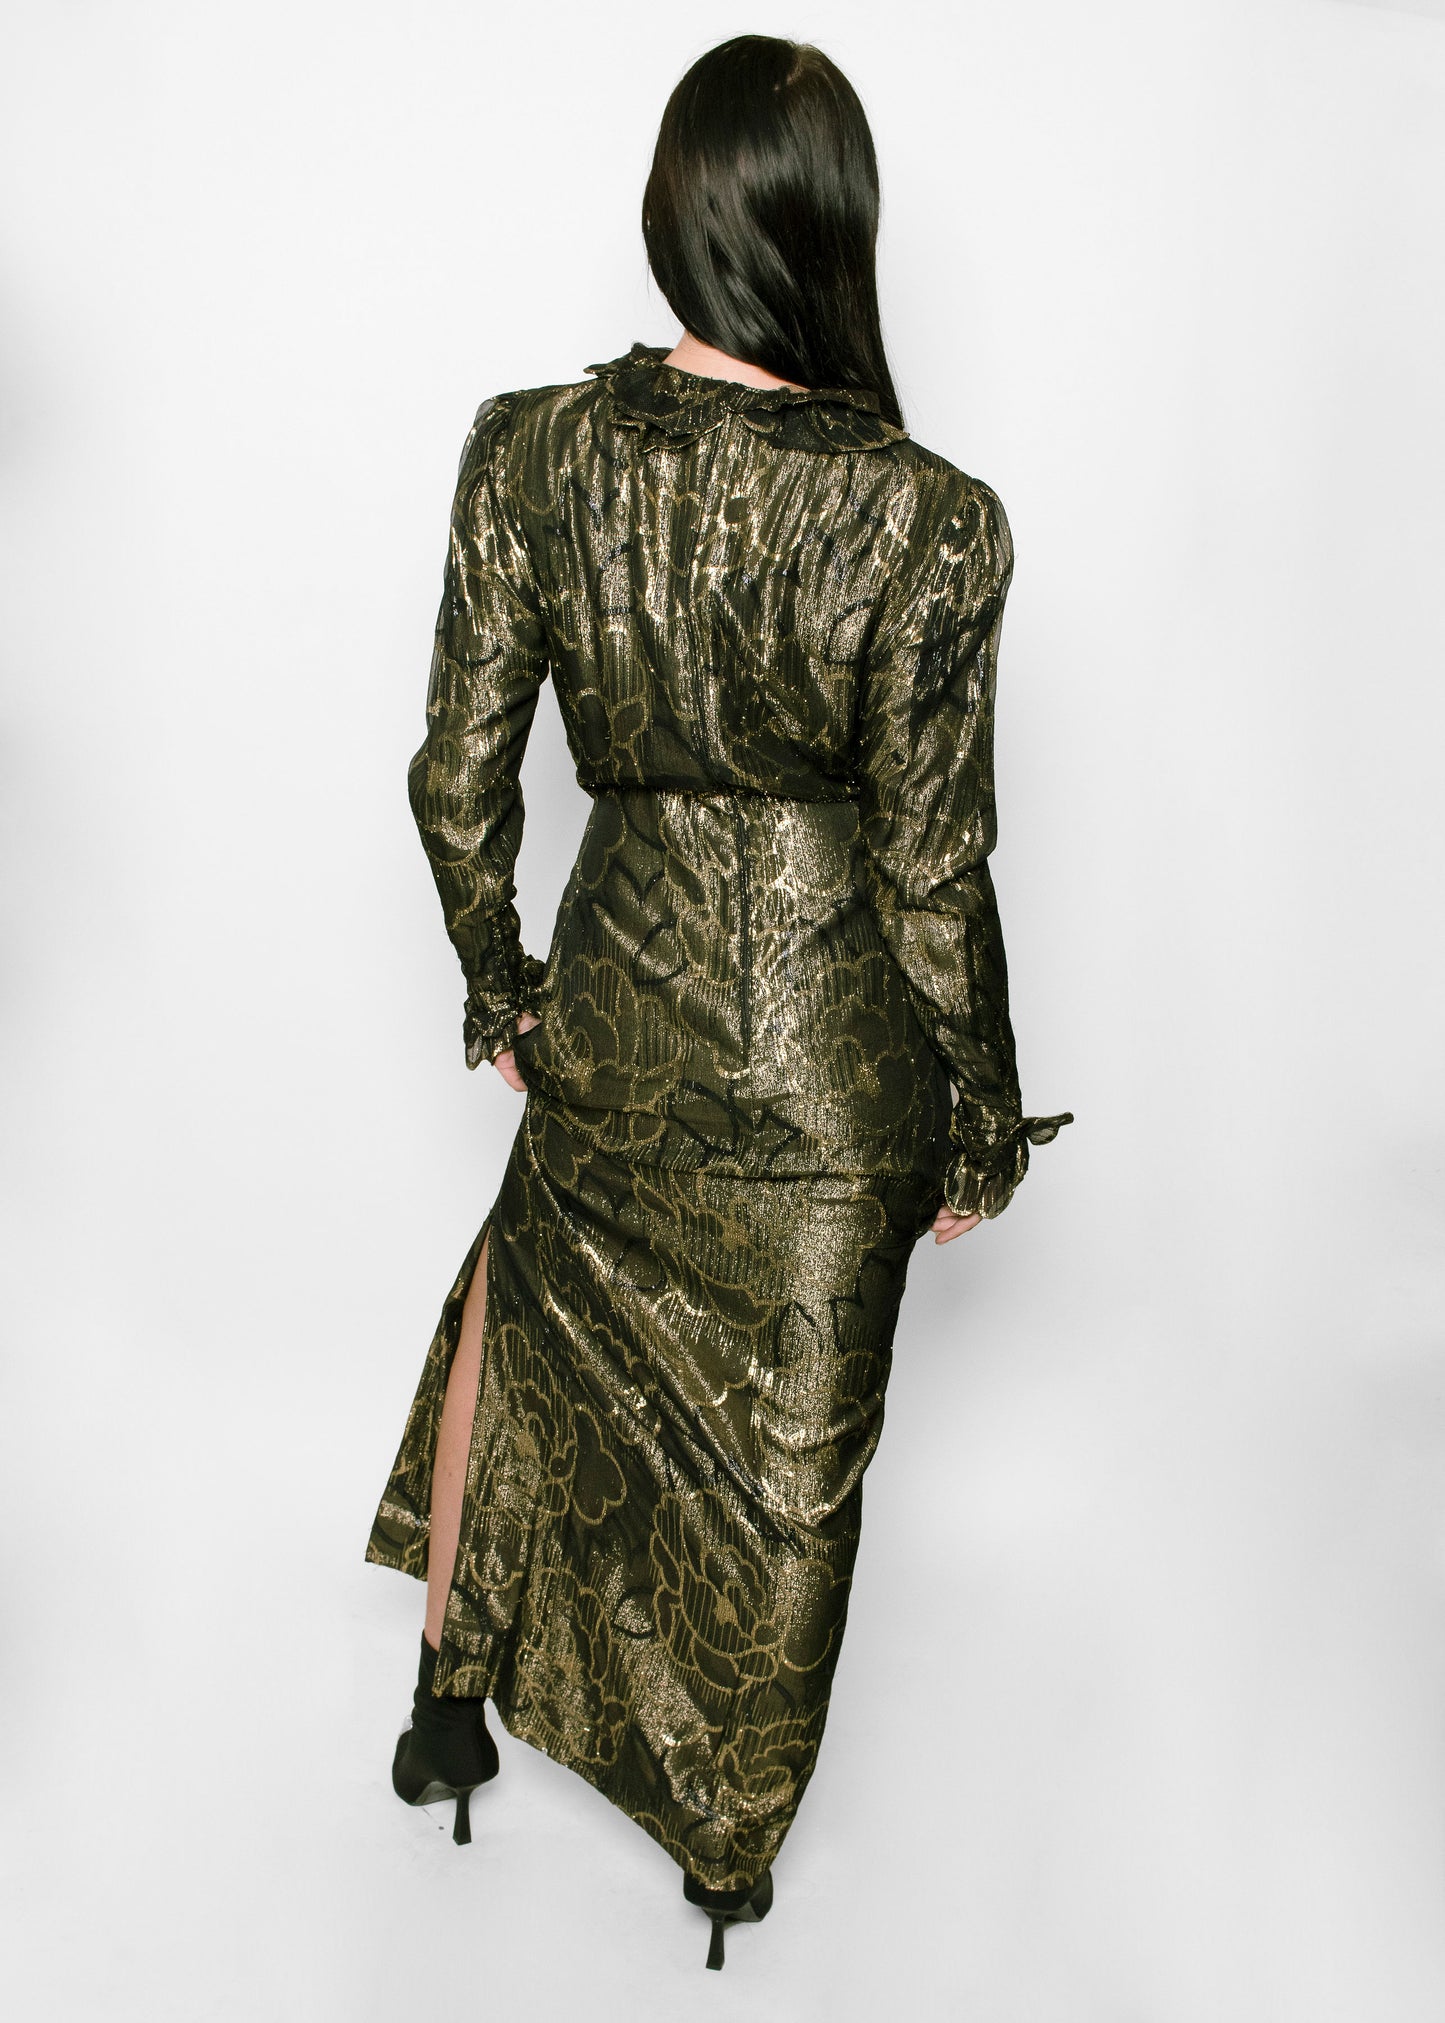 Pauline Trigere Black/Gold Metallic Dress